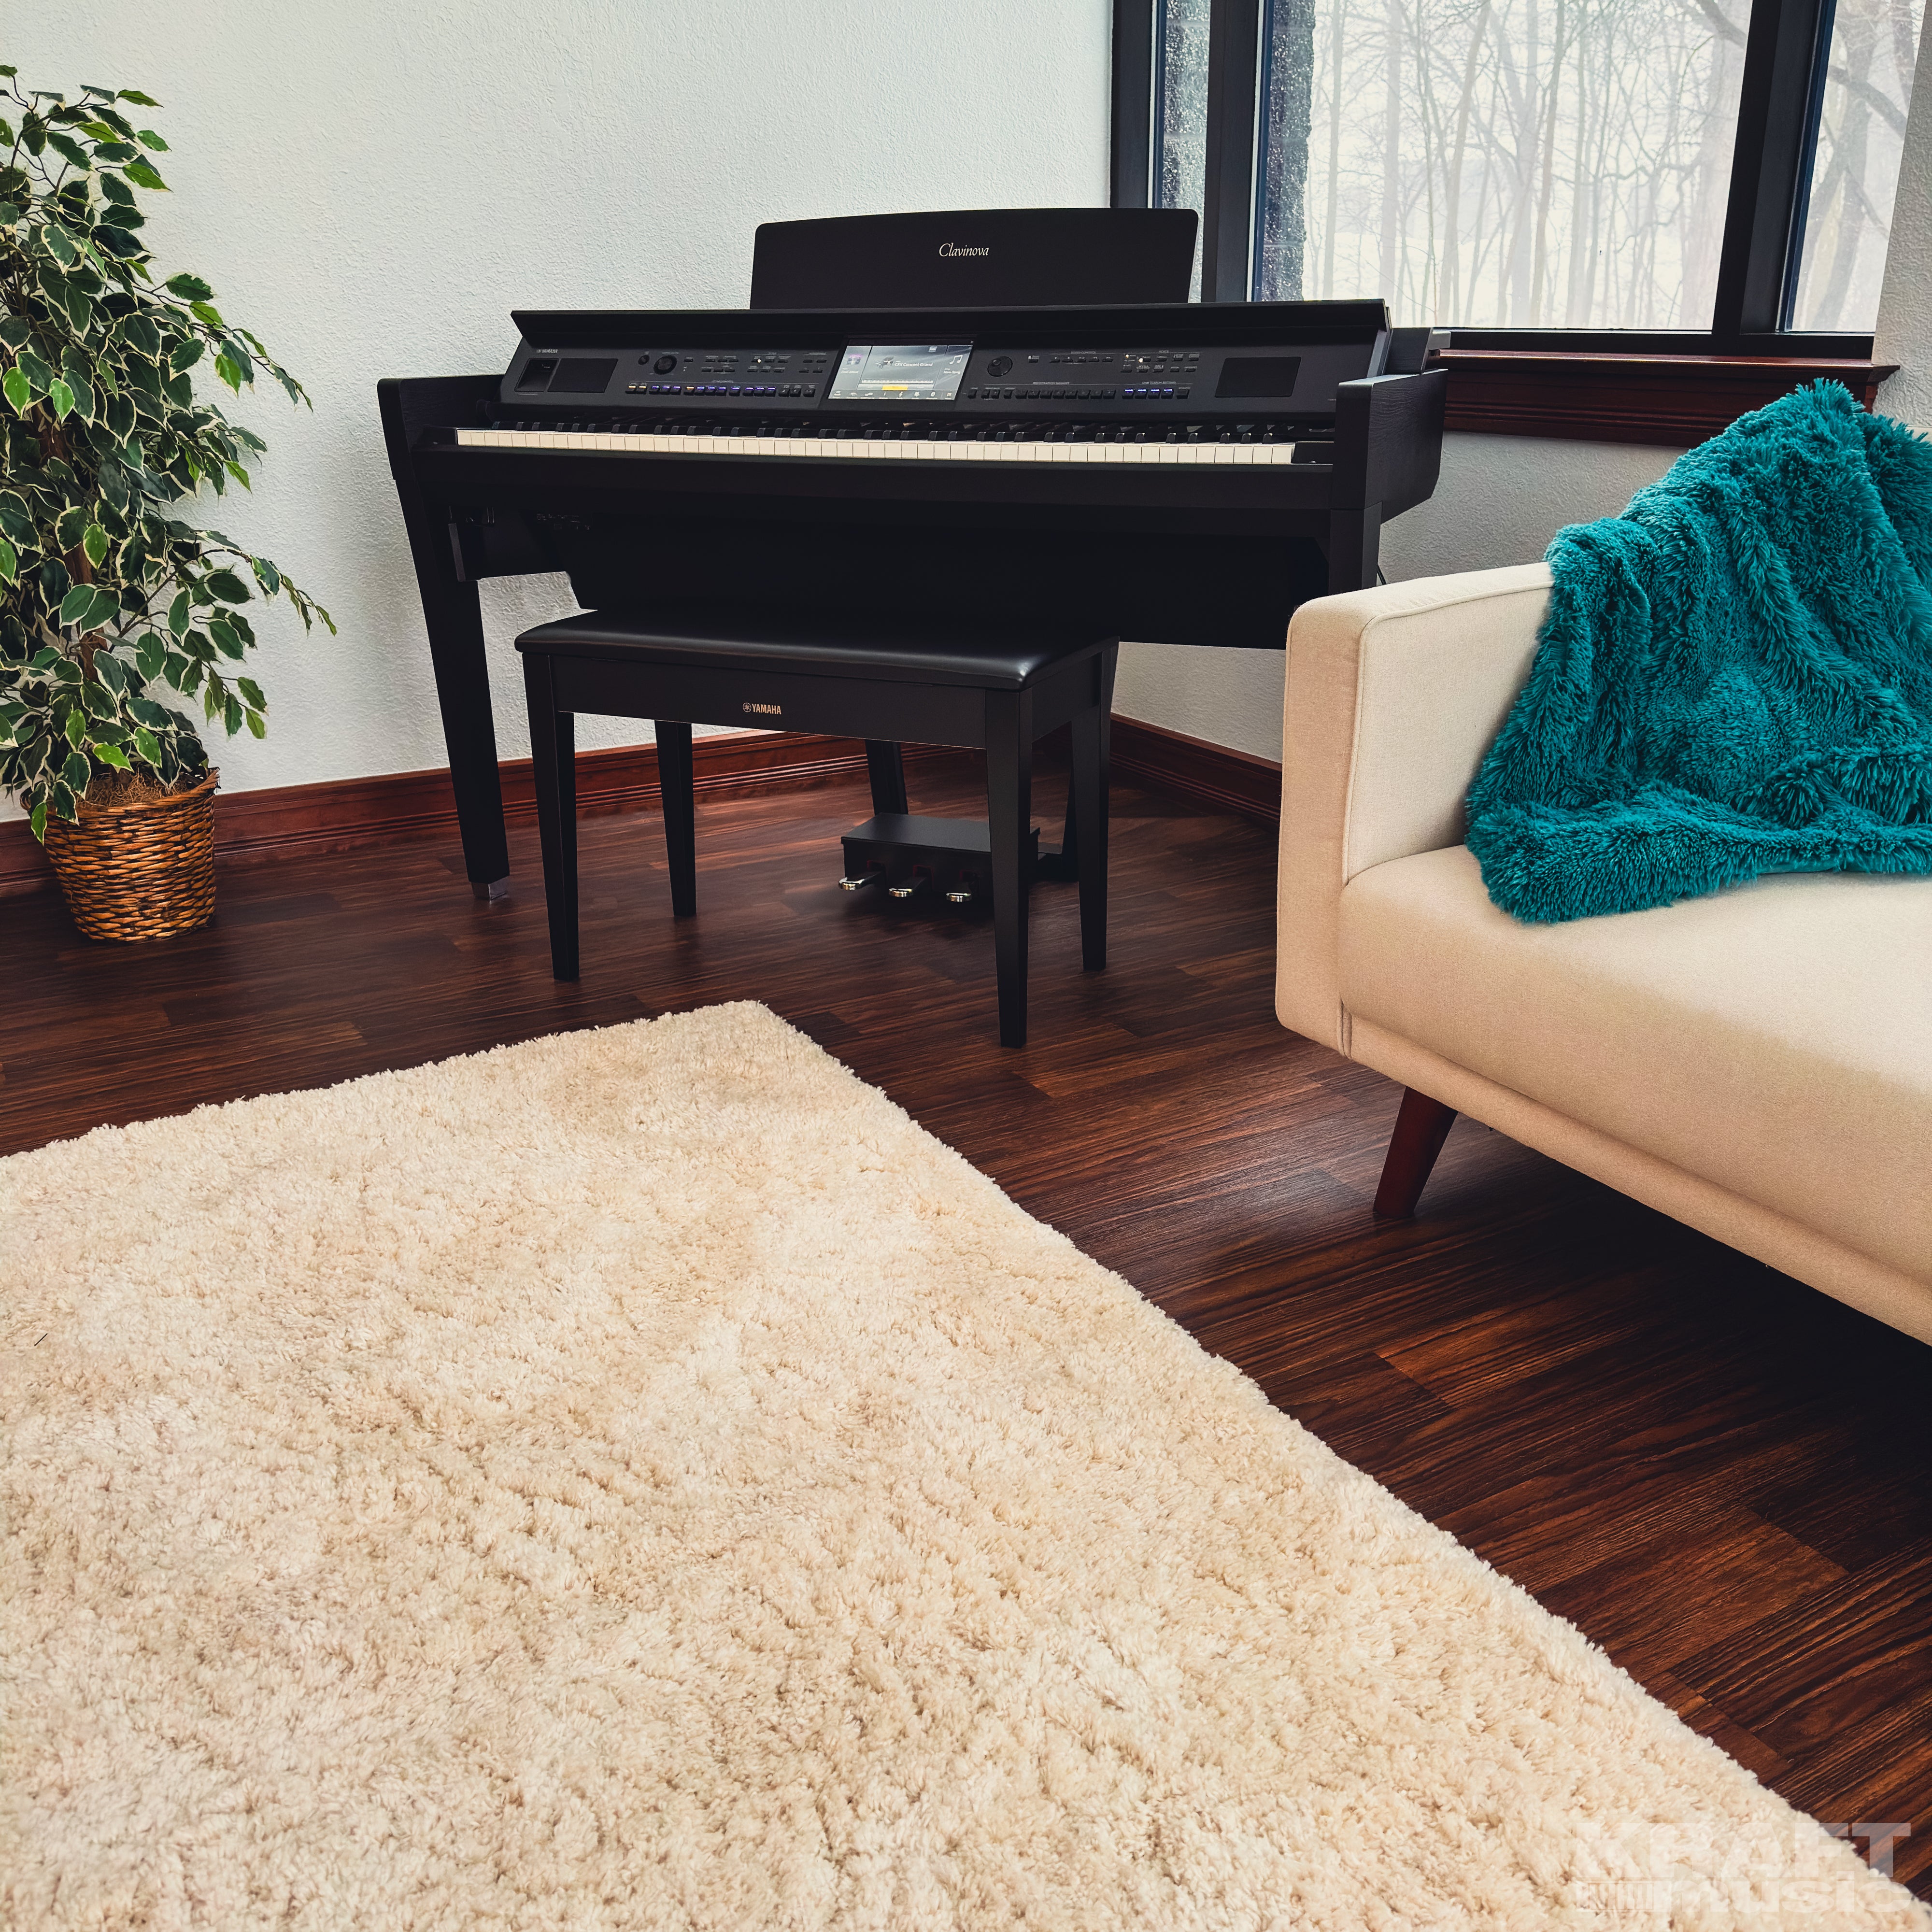 Yamaha Clavinova CVP-909 Digital Piano - Matte Black - in a stylish living room facing left